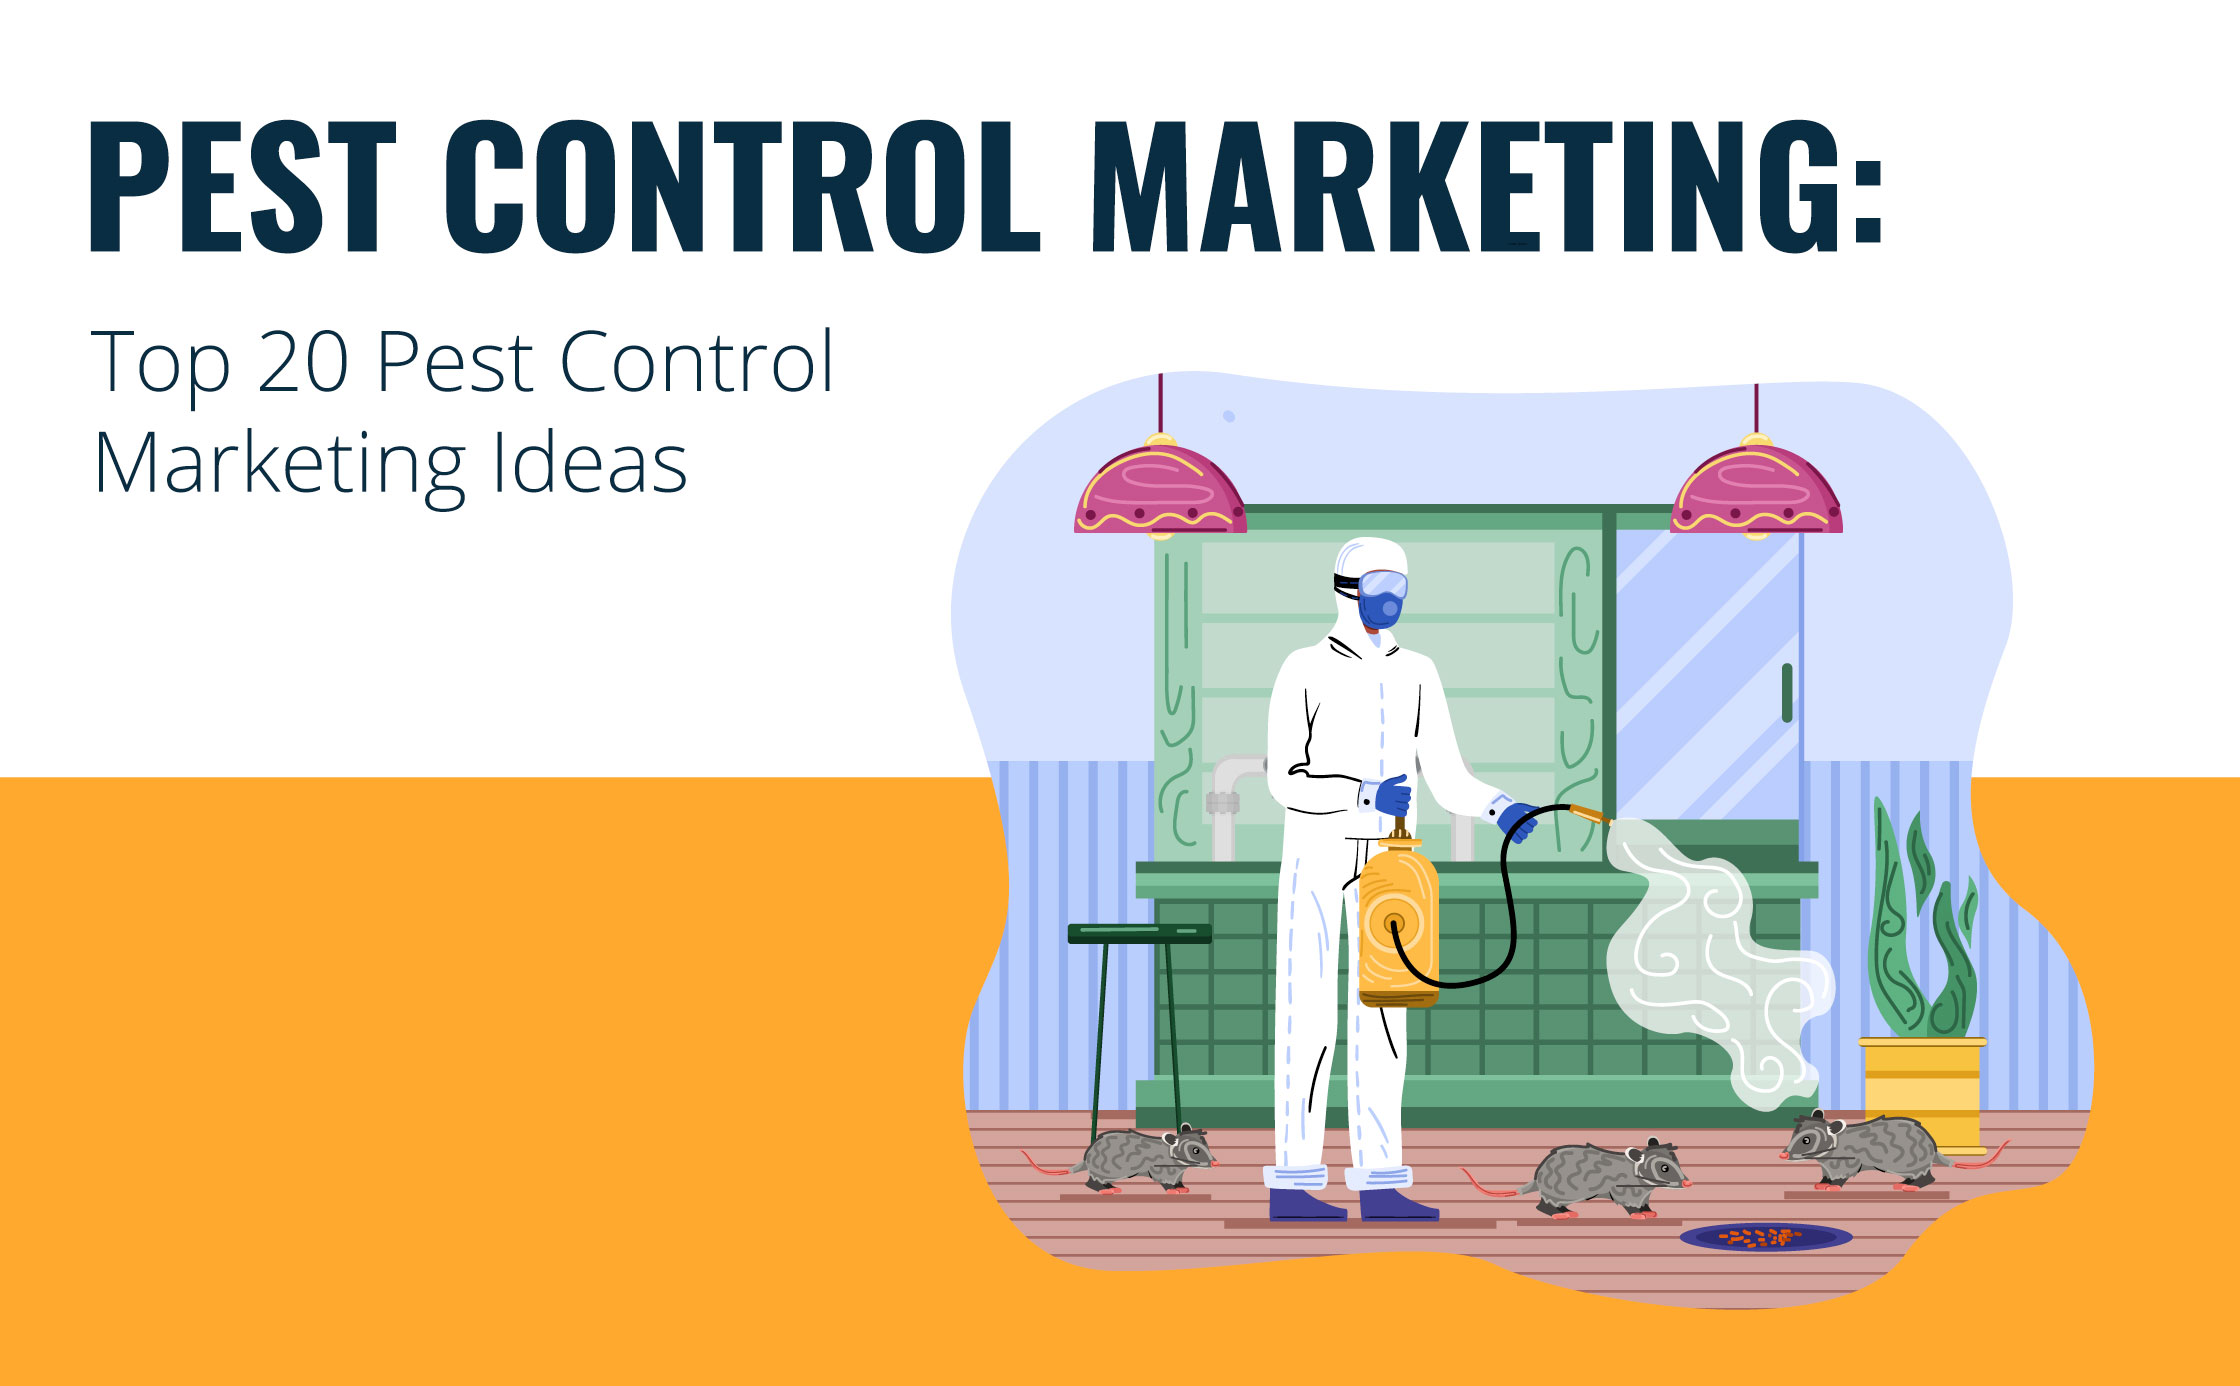 Top 20 Pest Control Marketing Ideas